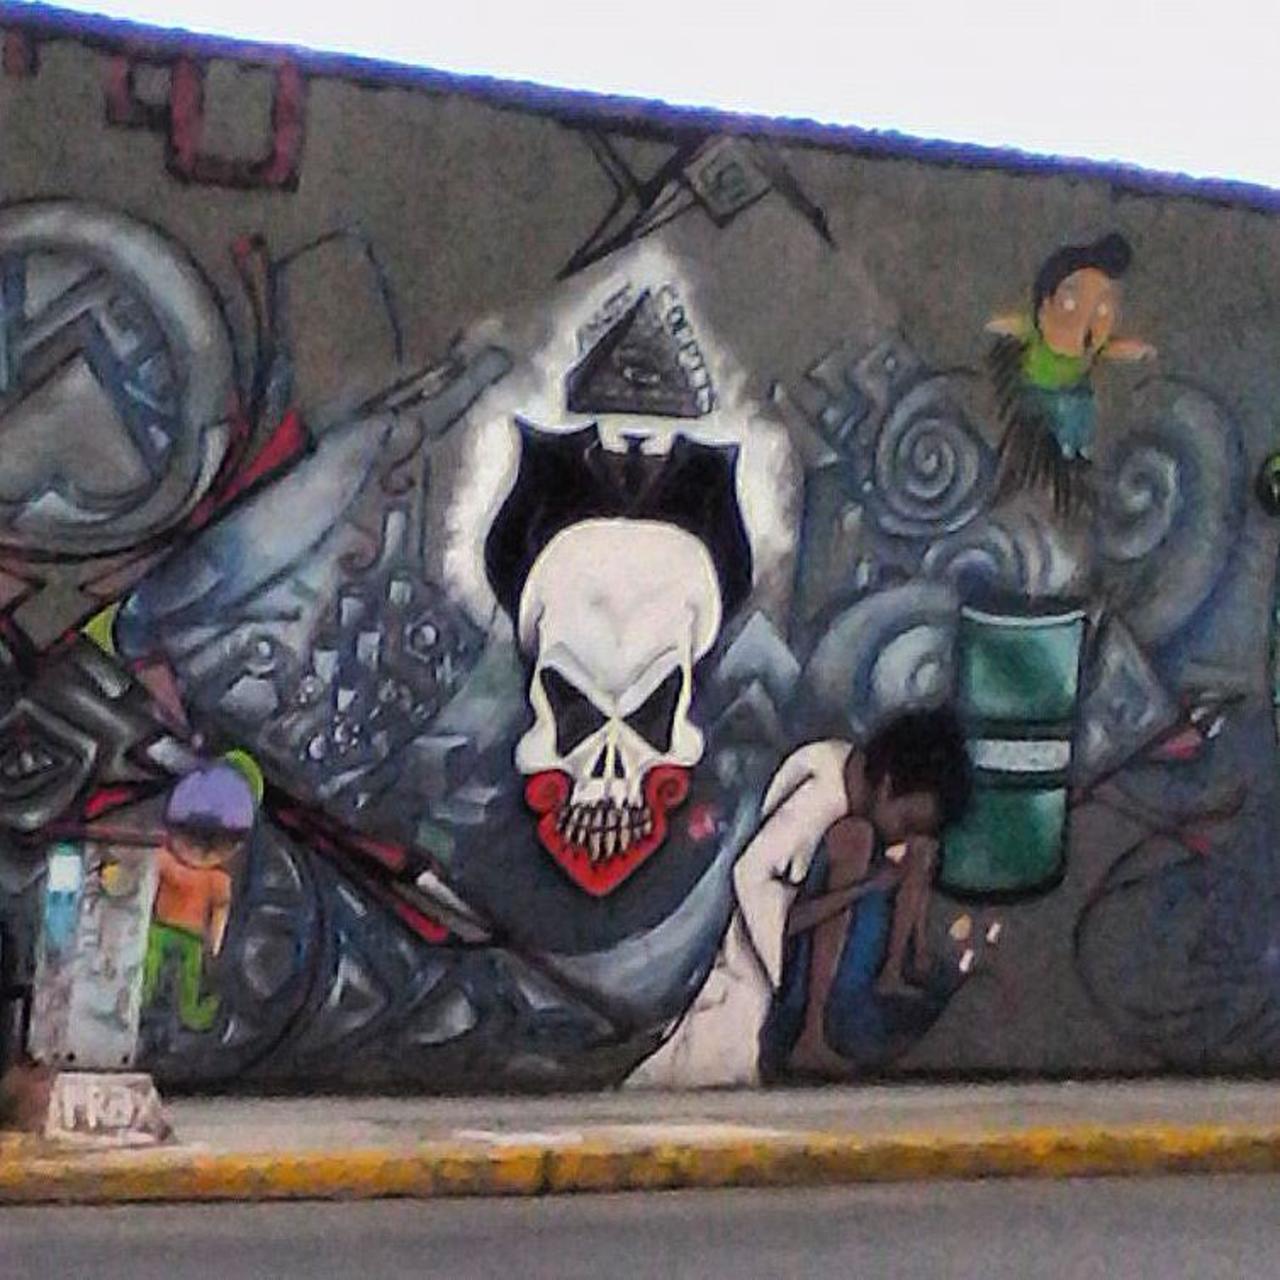 #Mexico #MexicoCity #StreetArt #Graffiti #StreetArtMexico #Urban #Art #Mural #Architecture #Wall #Bones #Skull #Hea… http://t.co/ENdPiONhlb